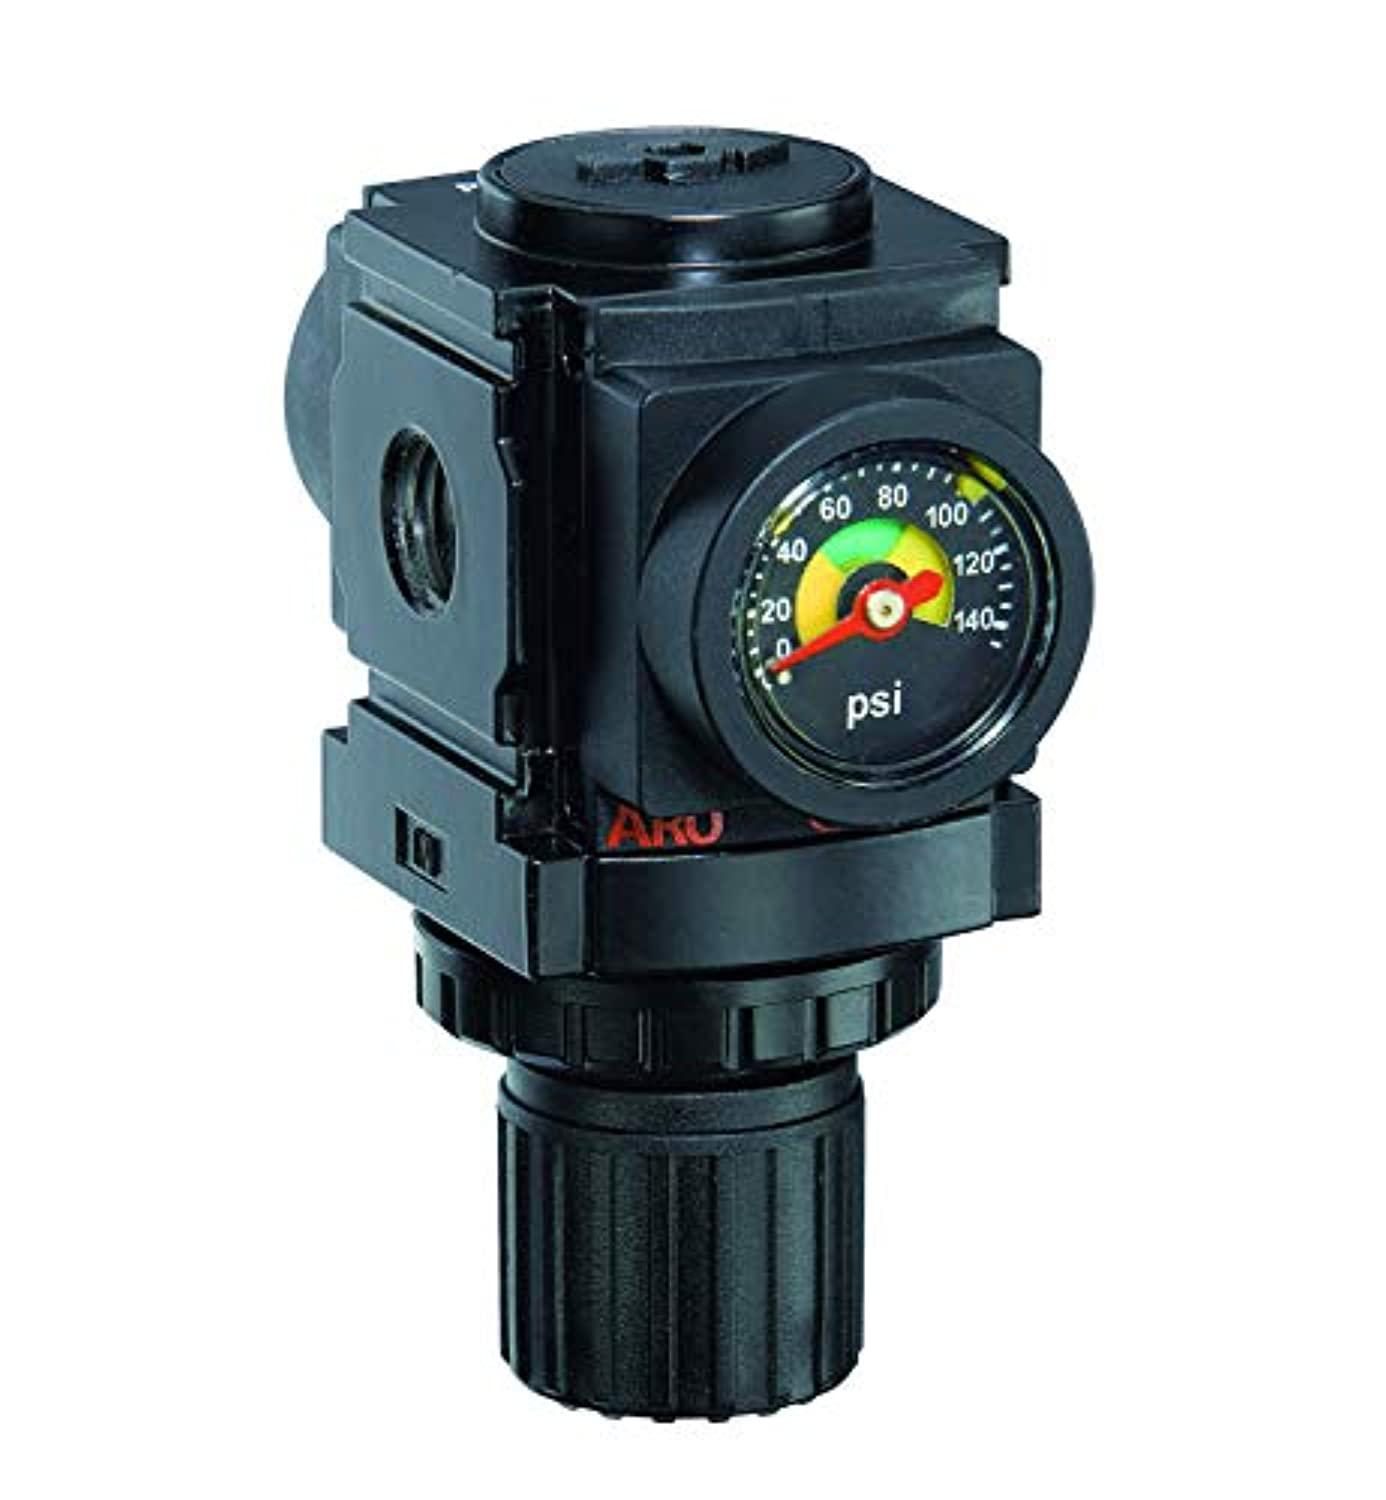 Ingersoll Rand aro r37121-600-vs air regulator 1/4" npt, w/ gauge - 250 psi max inlet